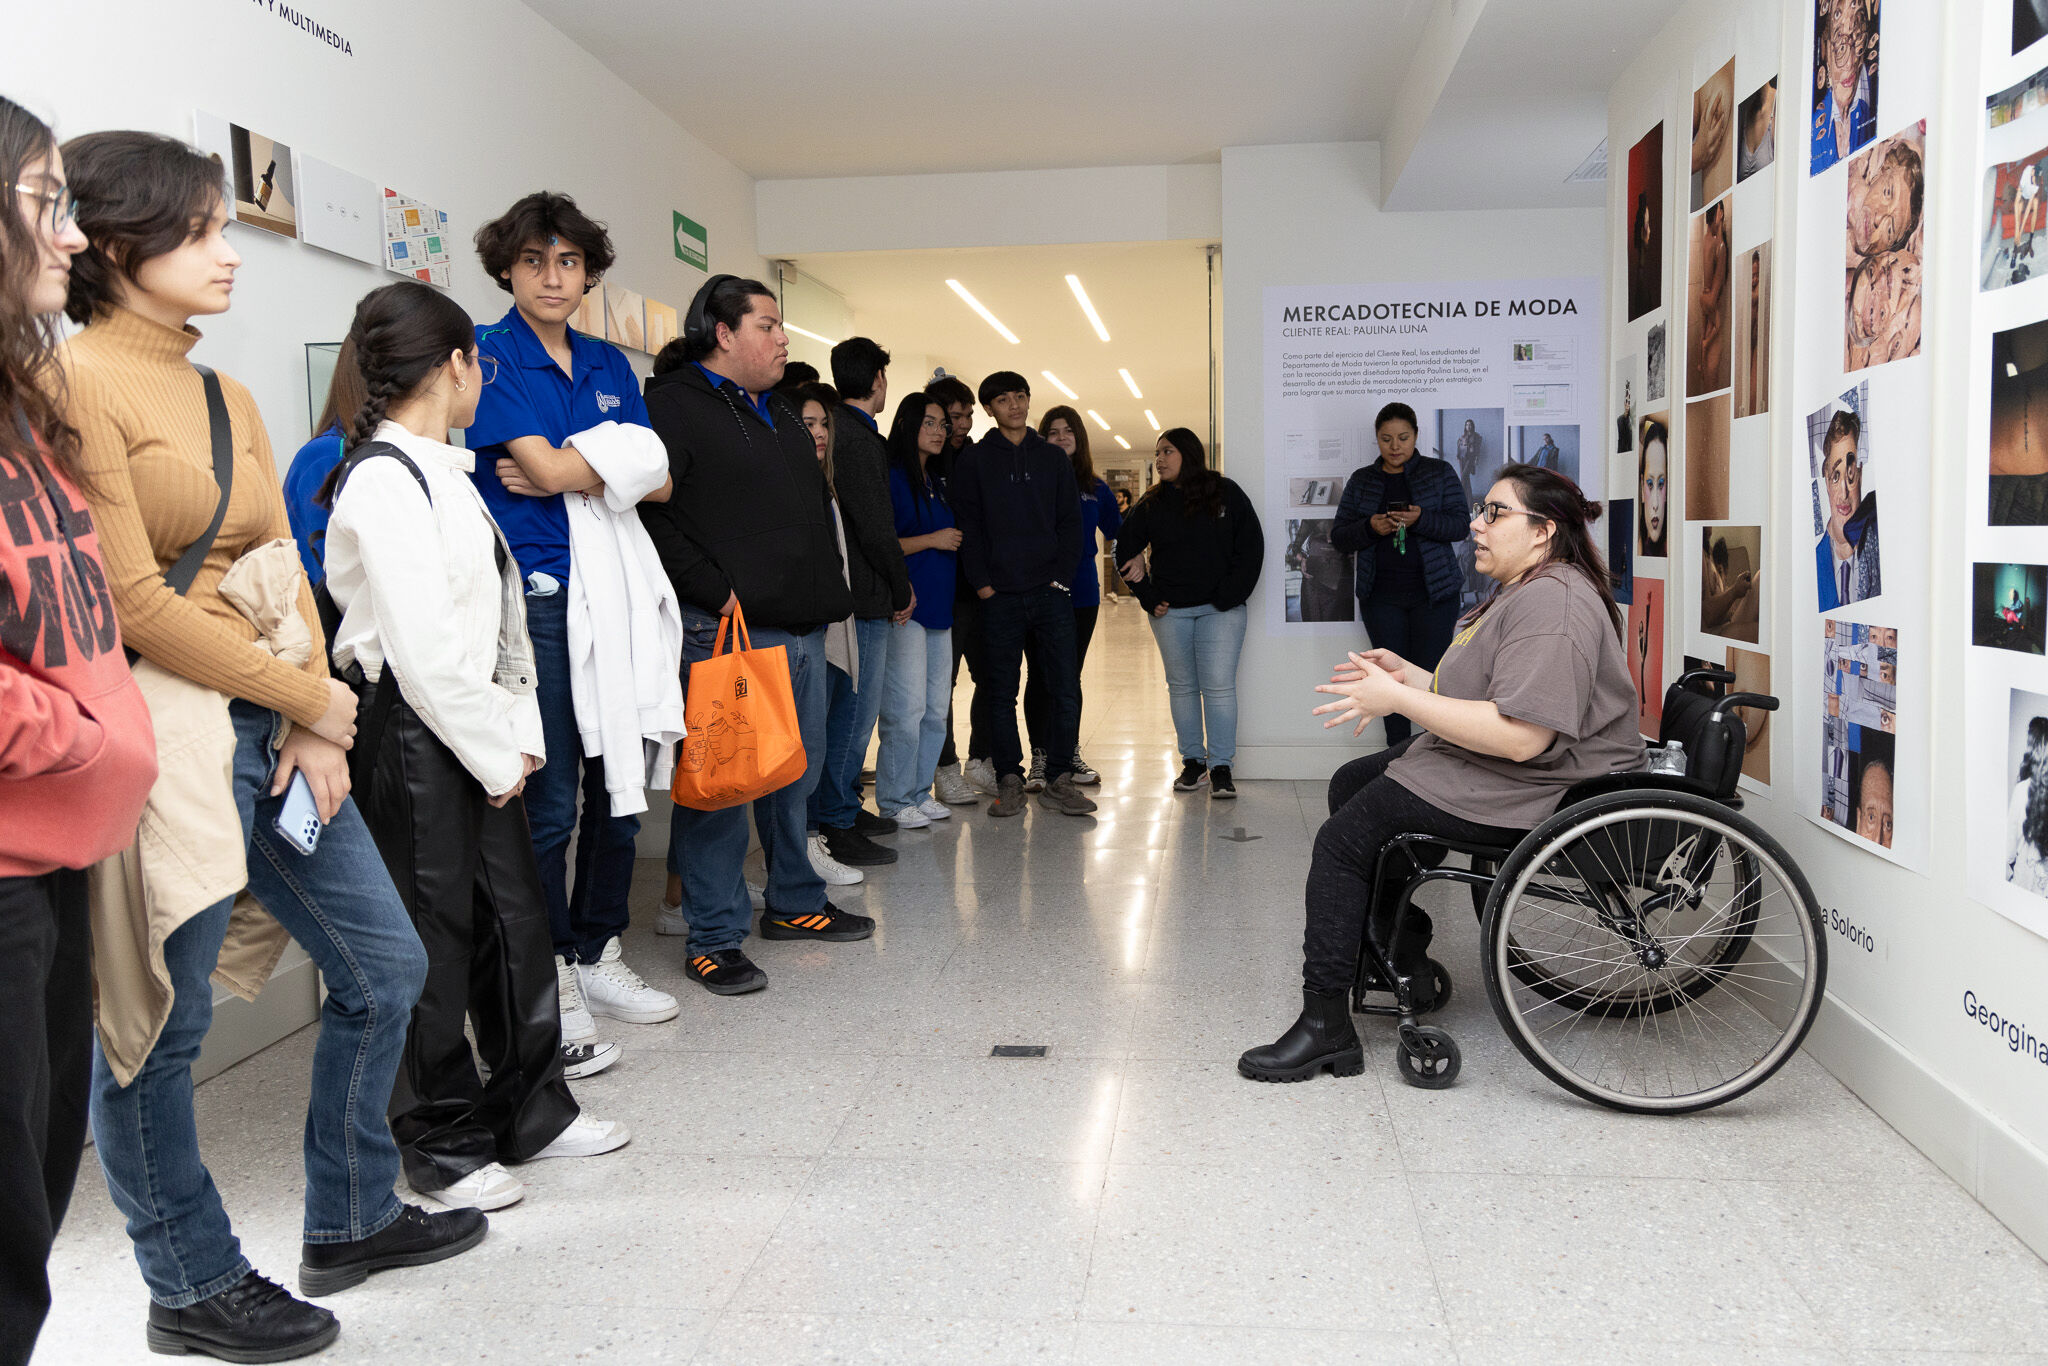 Un grupo diverso de estudiantes escucha atentamente a un presentador en silla de ruedas en un evento de galería académica, rodeado de proyectos creativos en las paredes.